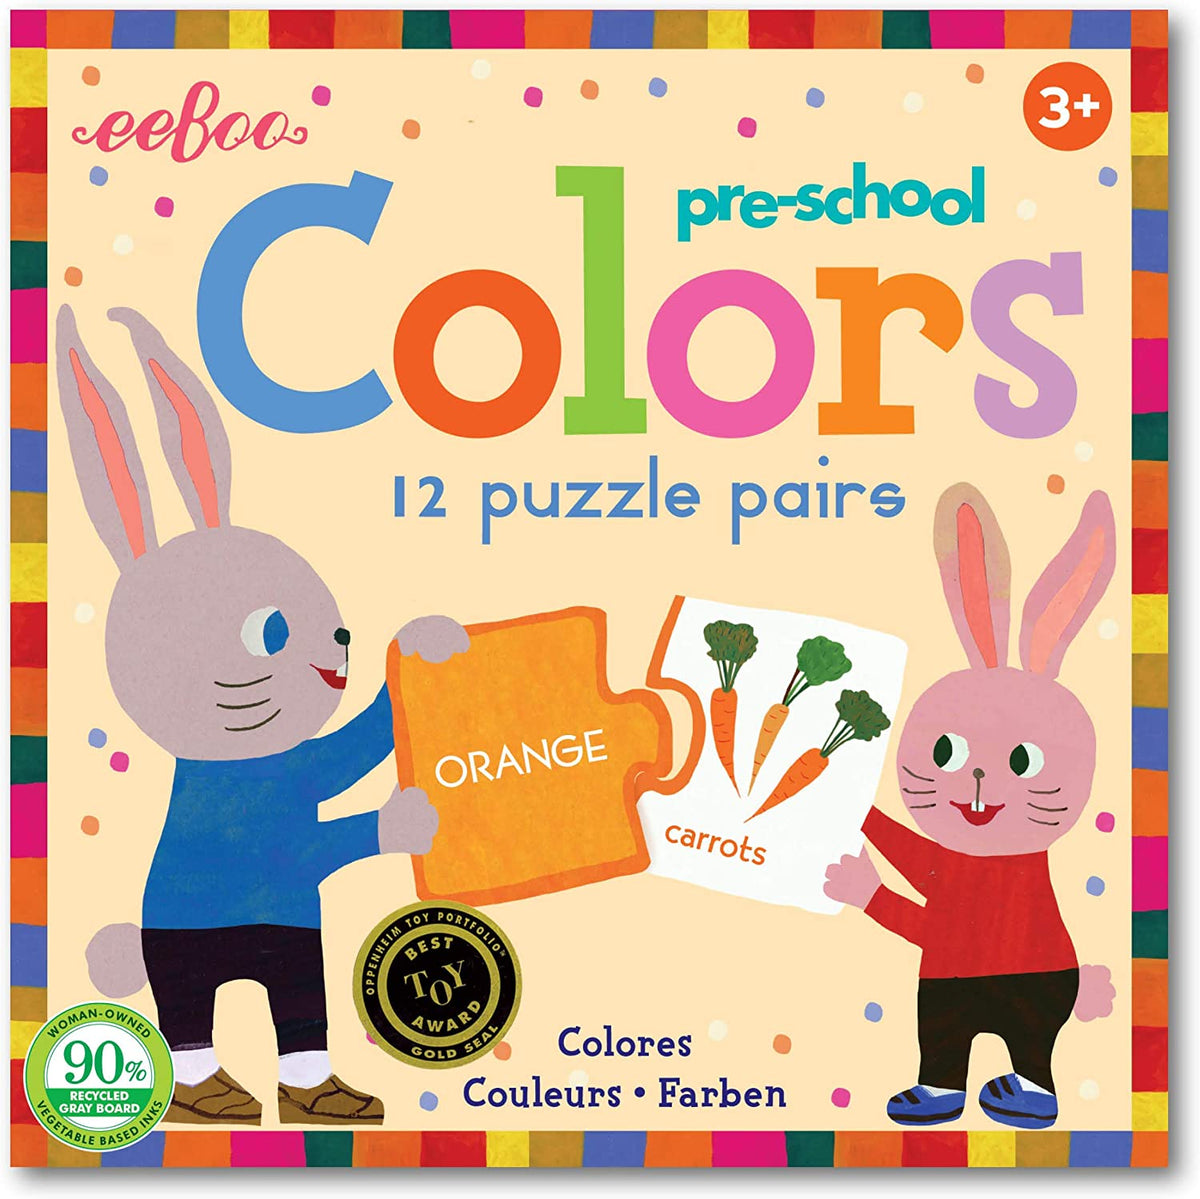 Preschool Colors 12 Puzzle Pairs